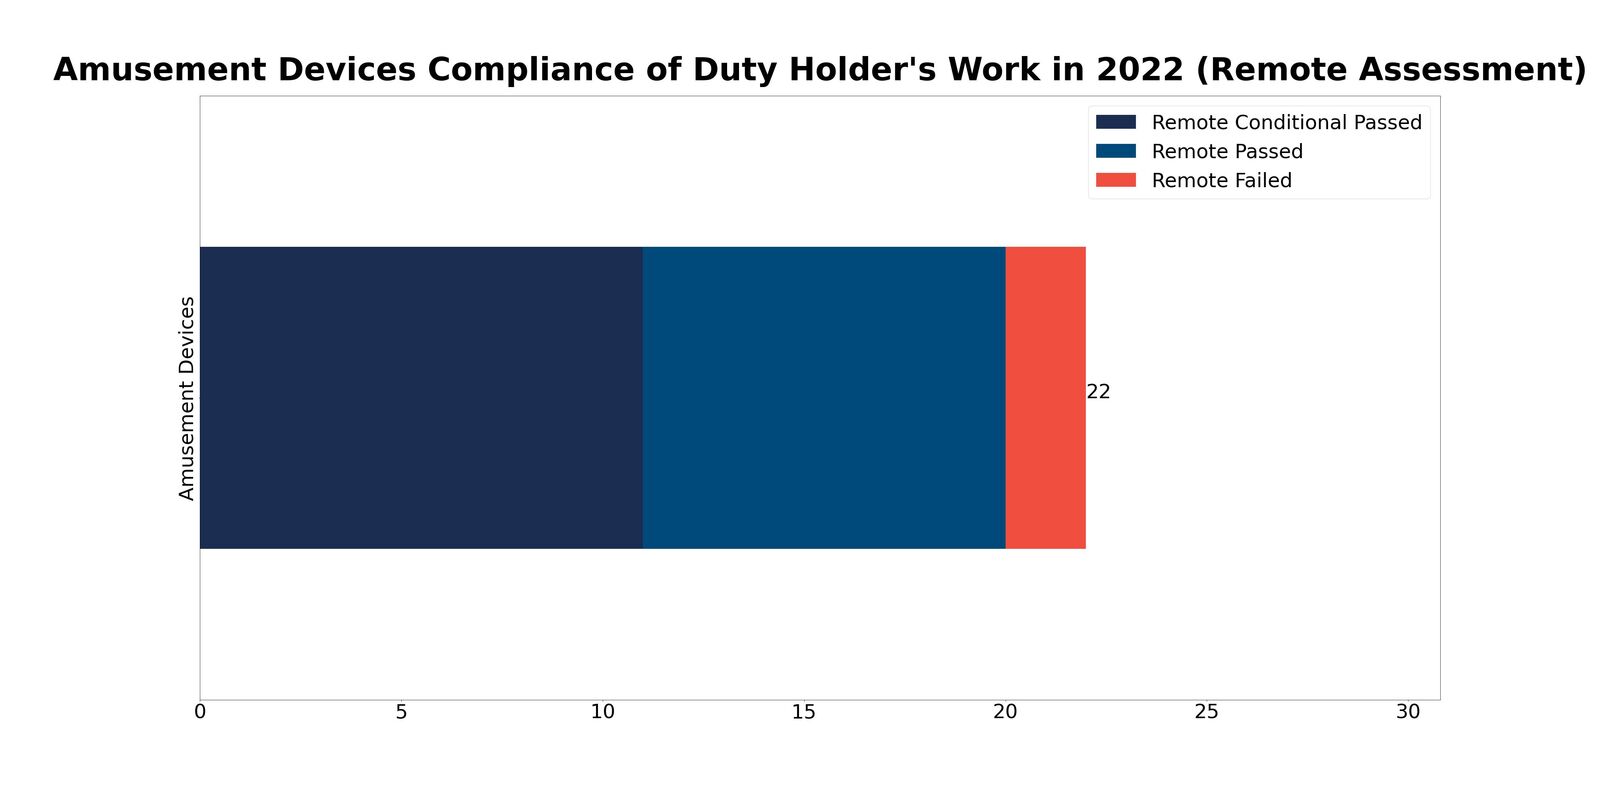 Amusement-Devices-Compliance-Duty-Holder-2022-Remote-Assessment.jpg